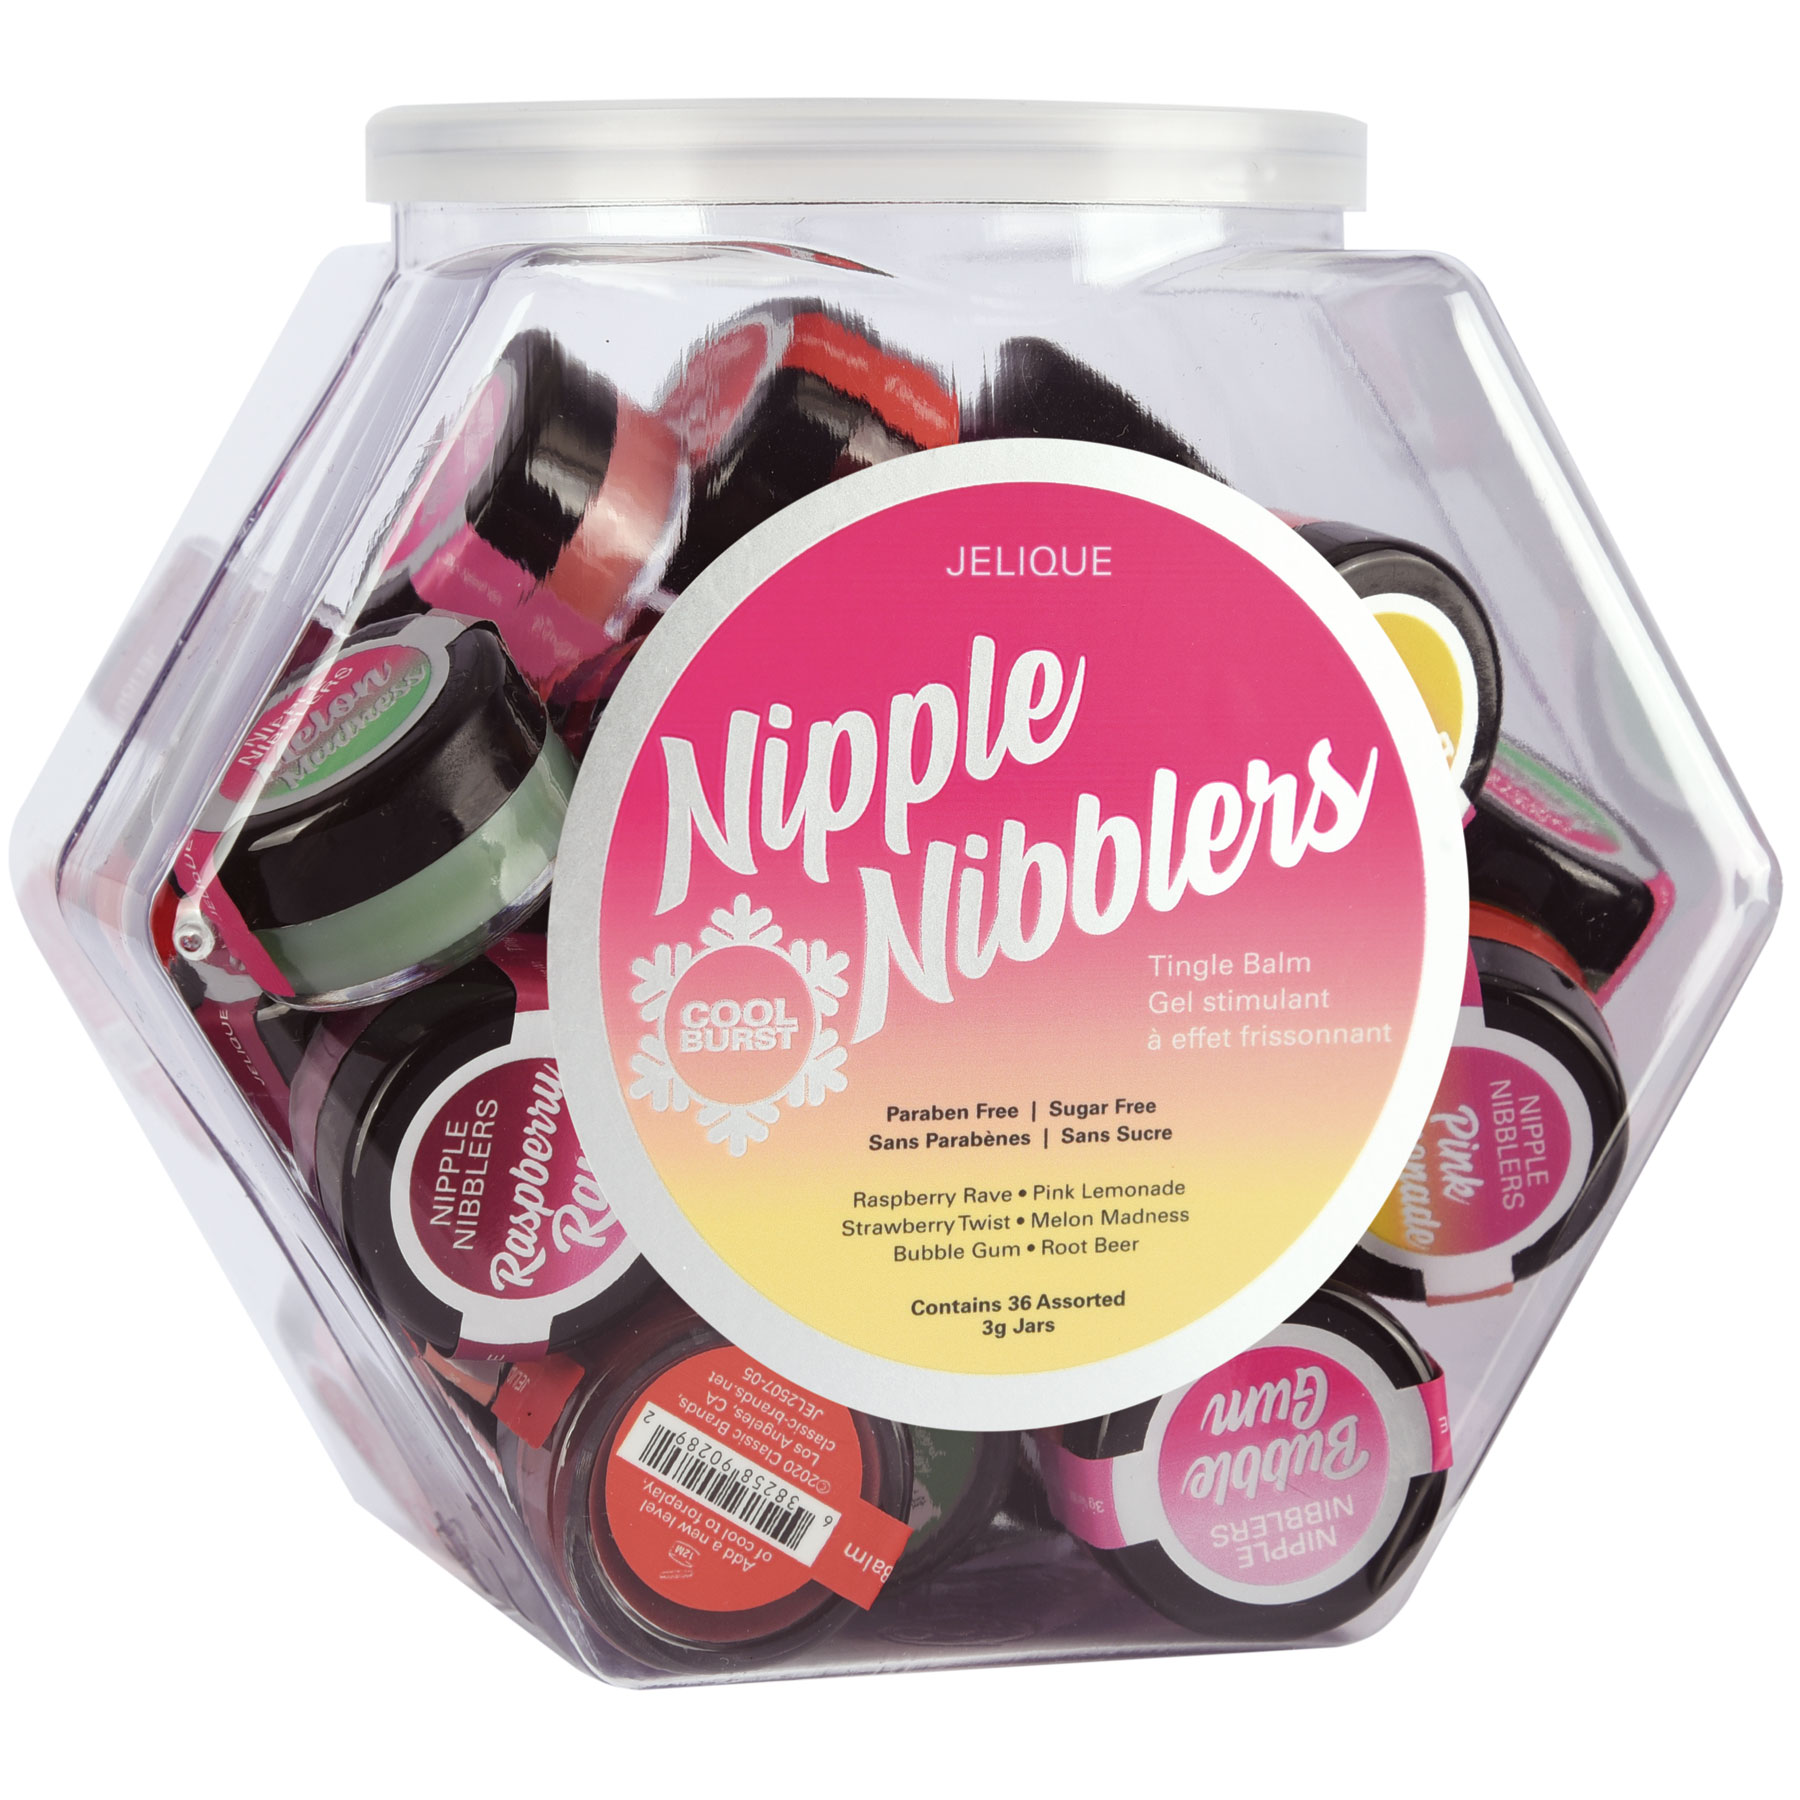 nipple nibblers tingle balm  pc bowl gm jars assorted 